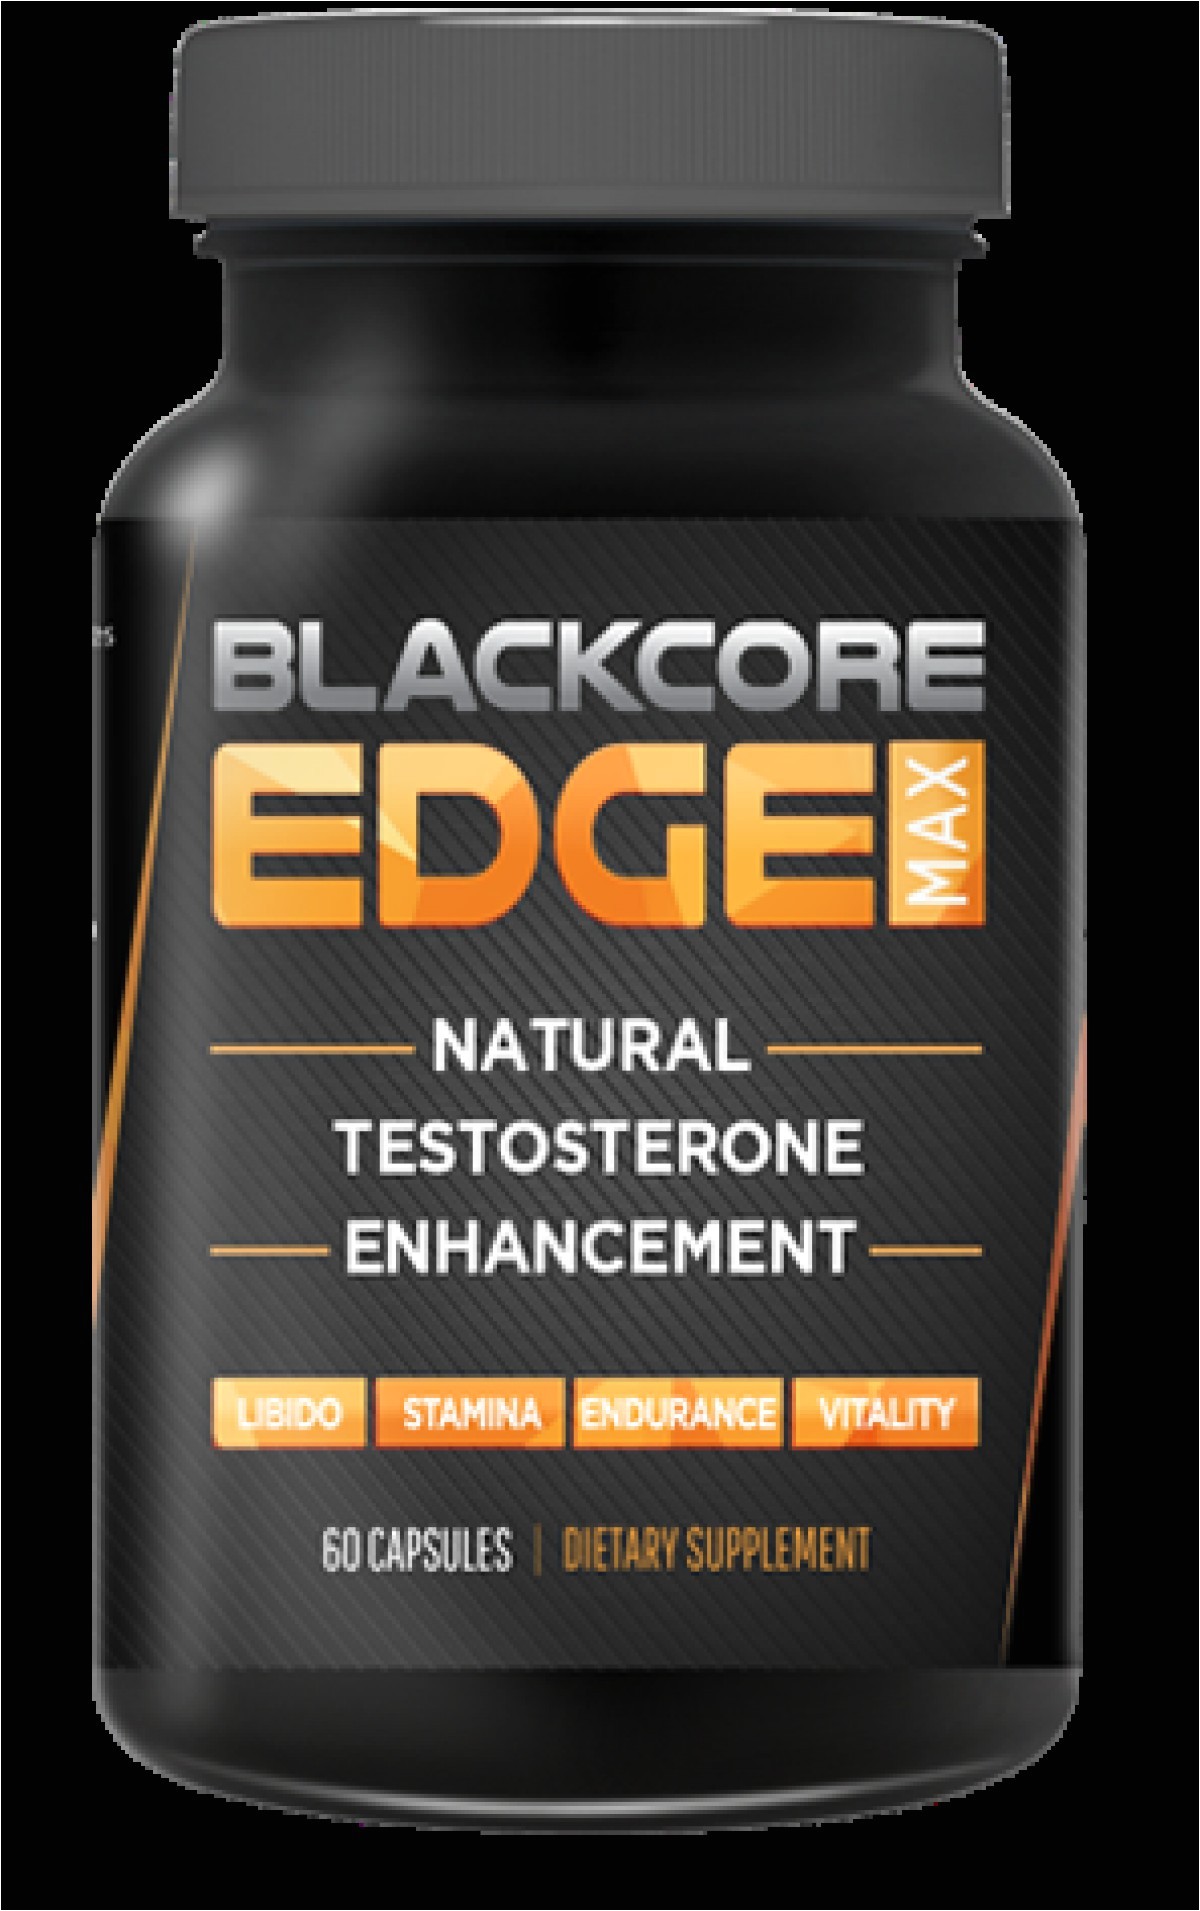 Blackcore Edge Max Testosterone Http Newhealthsupplement Com Blackcore Edge Max Other Market